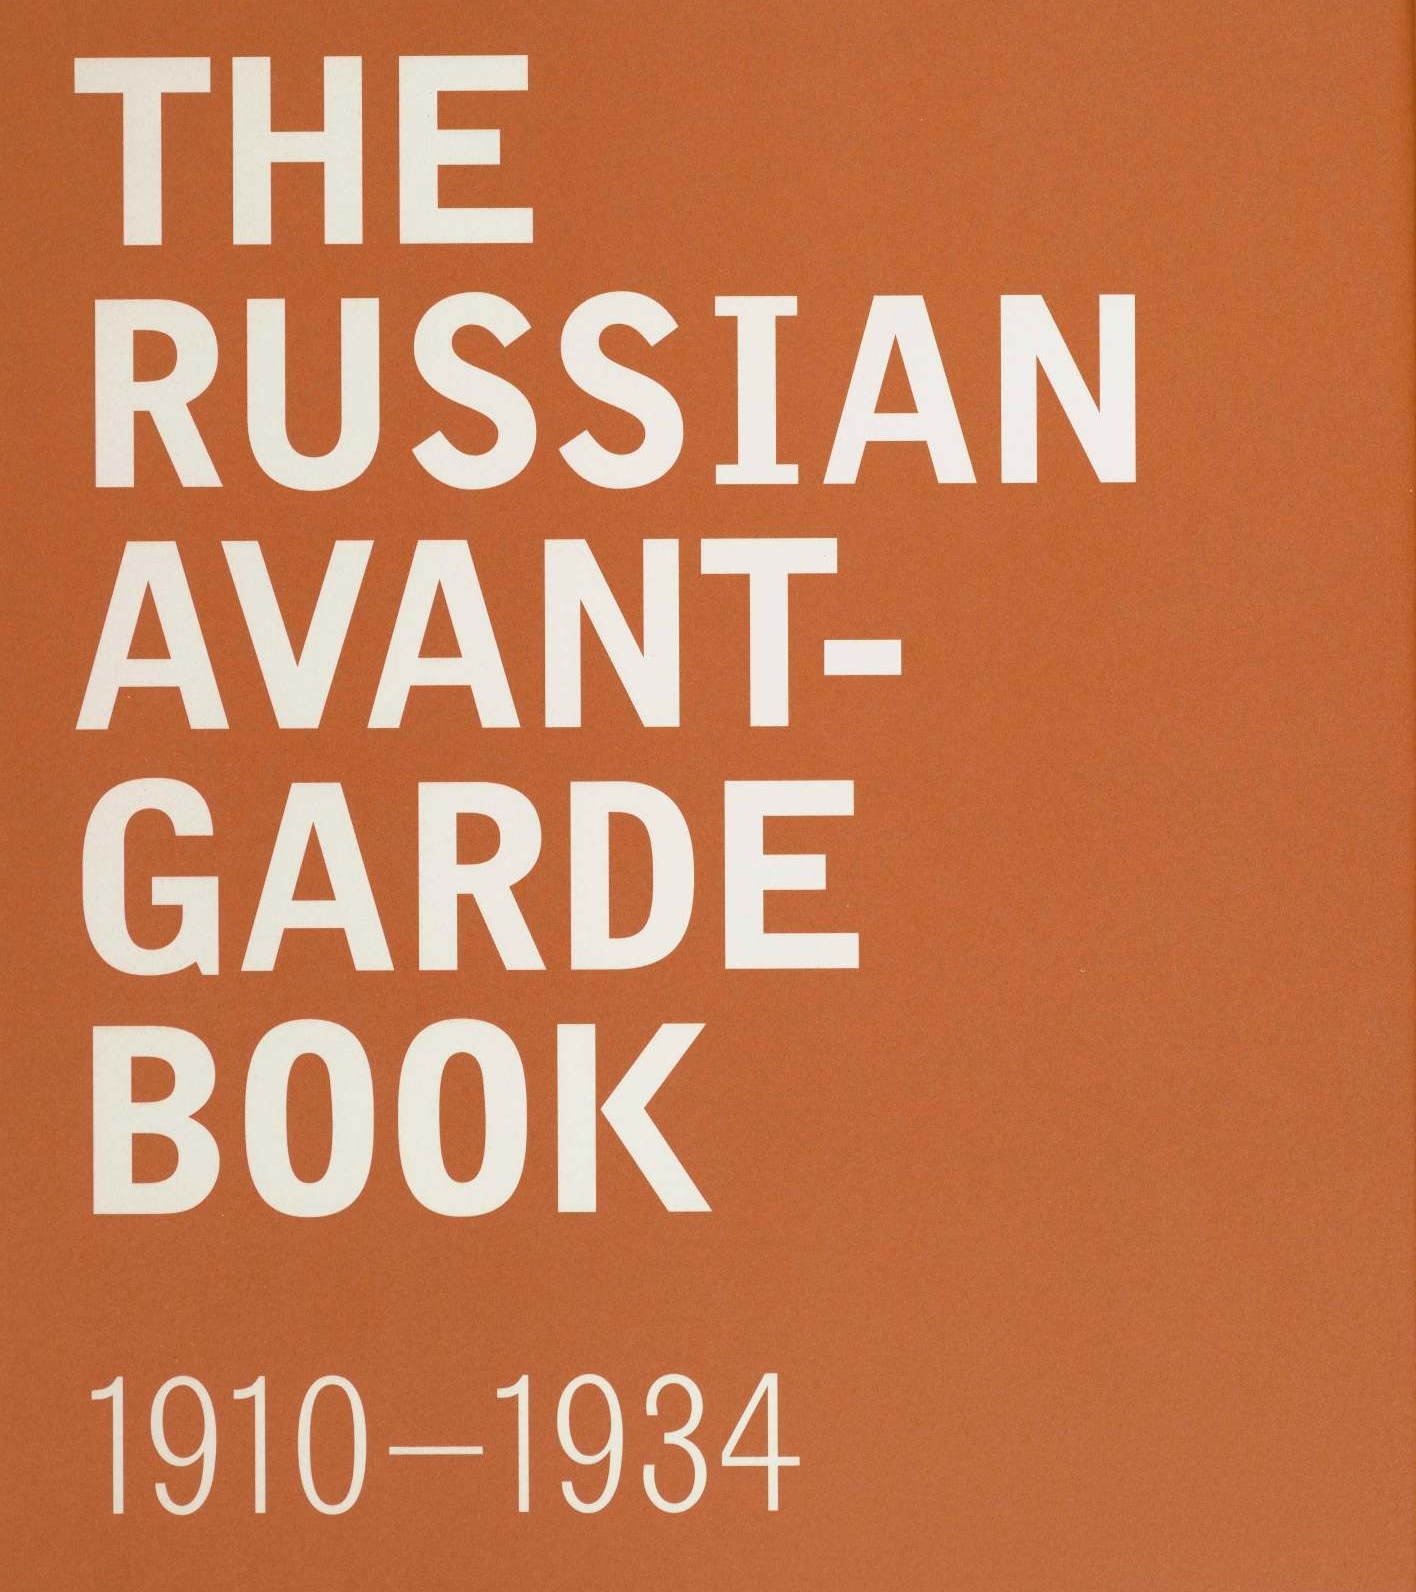 The Russian avant-garde book 1910-1934. — New York, 2002 | портал 